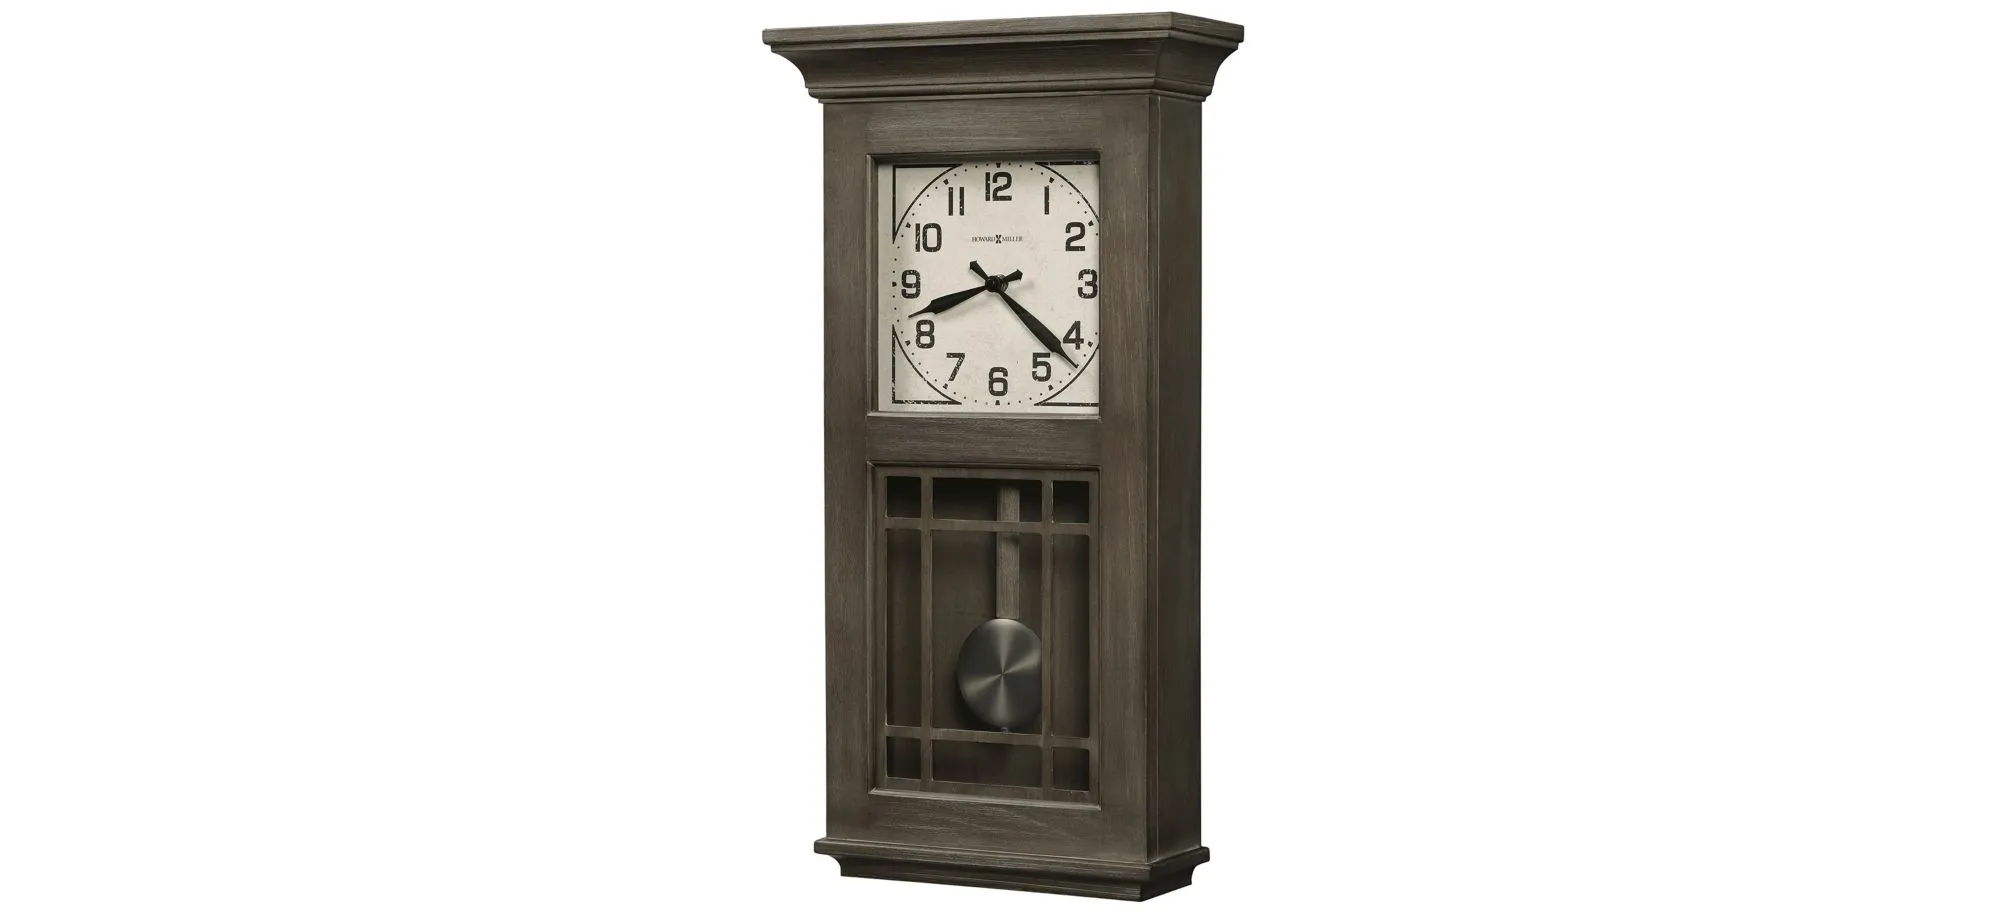 Amos Wall Clock in Aged Auburn by Howard Miller